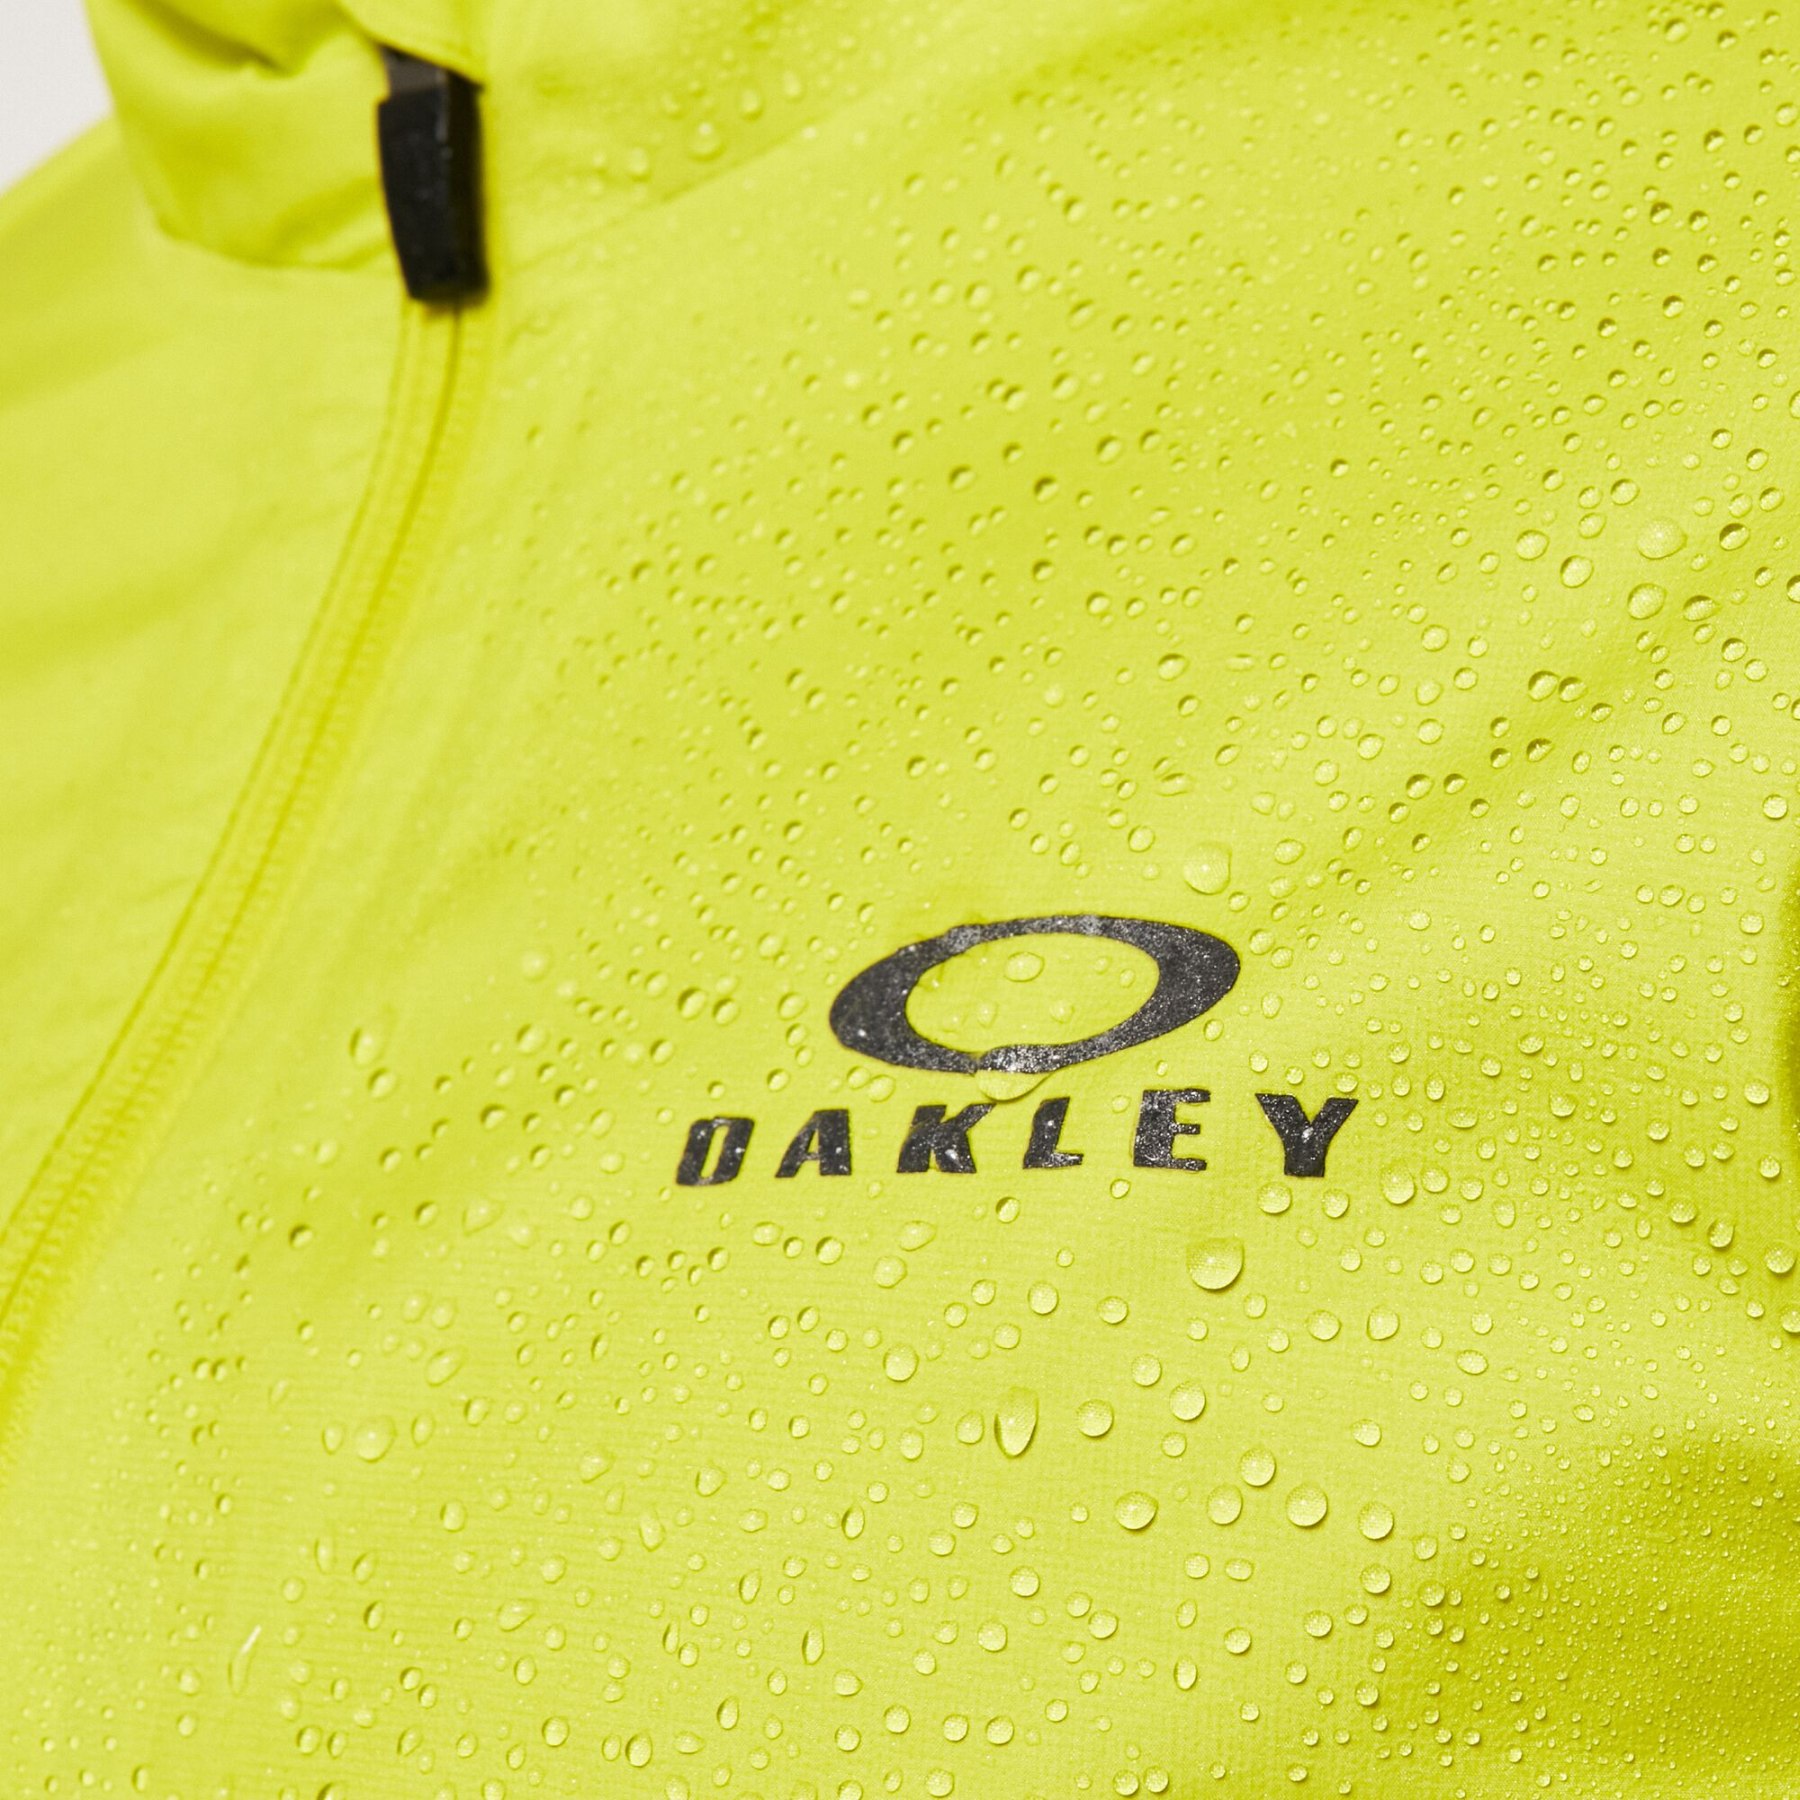 Oakley Endurance Shell Jacket Men - Sulphur | BIKE24